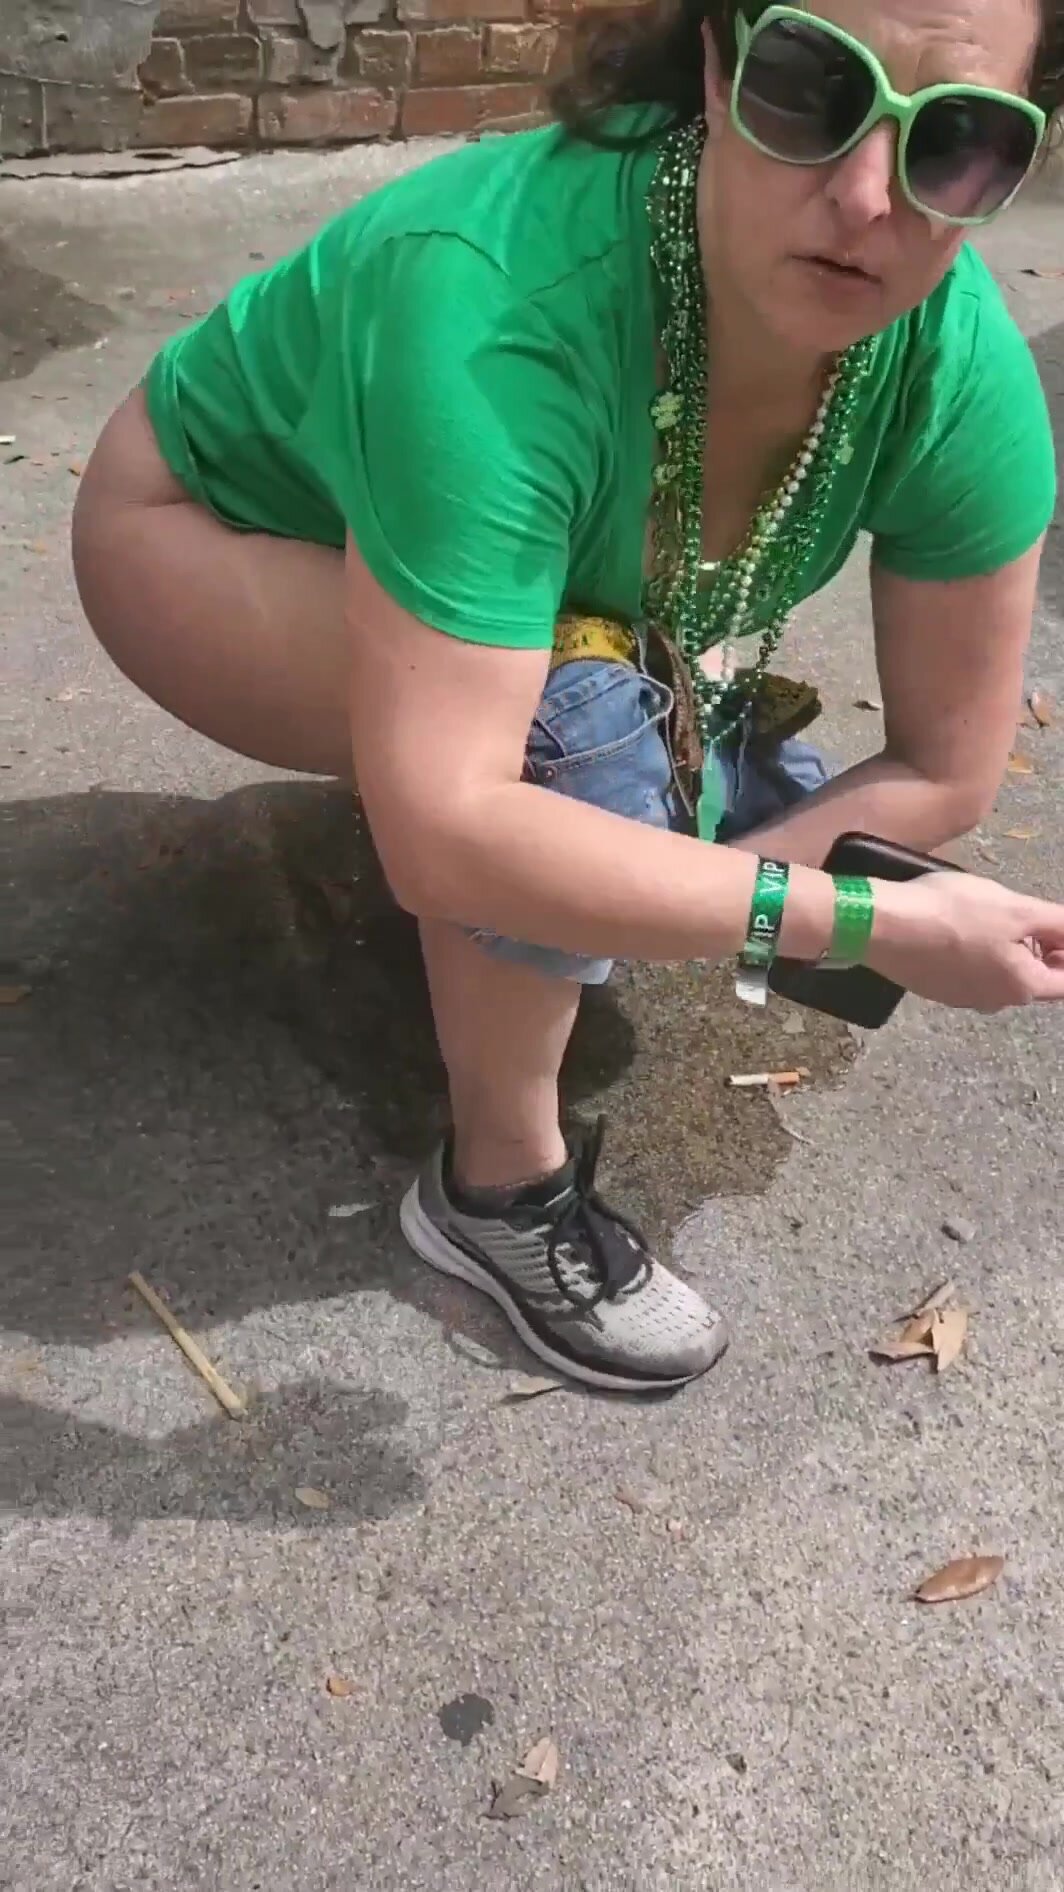 Woman pisses between cars at St. Patrick's Day Parade